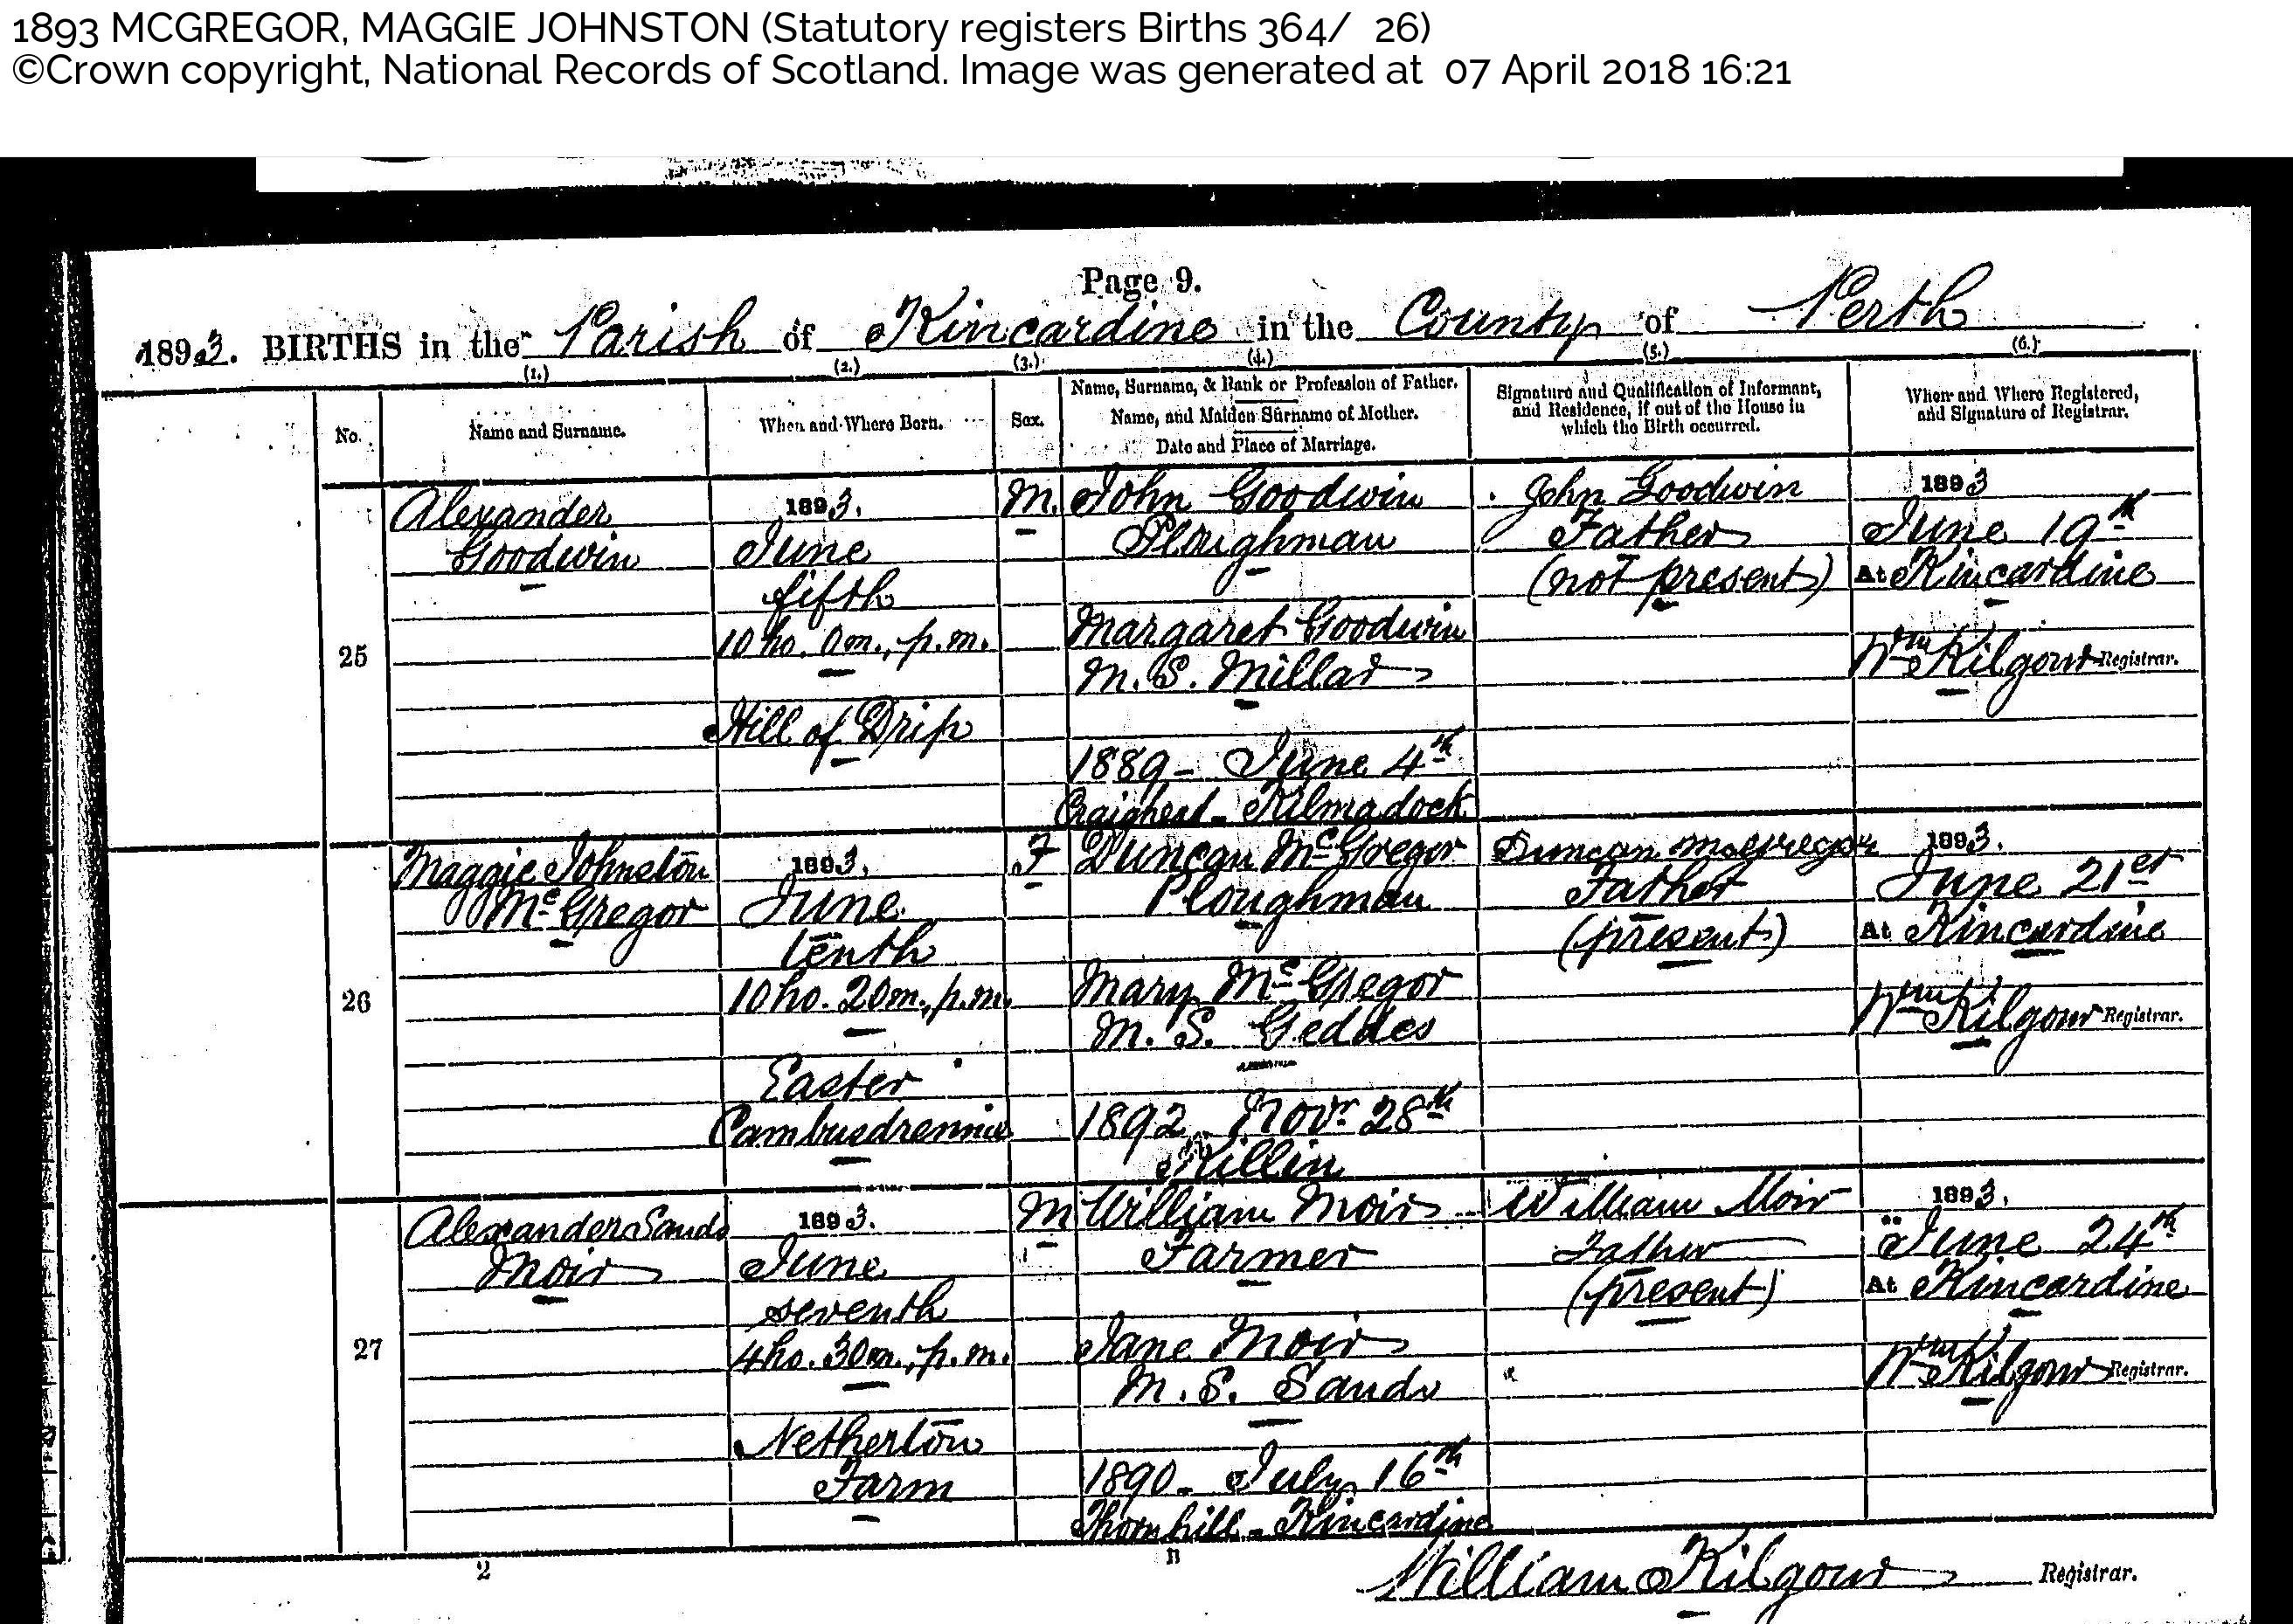 MaggieJohnstonMacgregor_B1893 Kincardine Perthshire, June 10, 1893, Linked To: <a href='profiles/i3513.html' >Maggie Johnston Macgregor</a> and <a href='profiles/i464.html' >Mary O’Grady (Geddes) ~</a> and <a href='profiles/i463.html' >Duncan MacGregor ~</a>